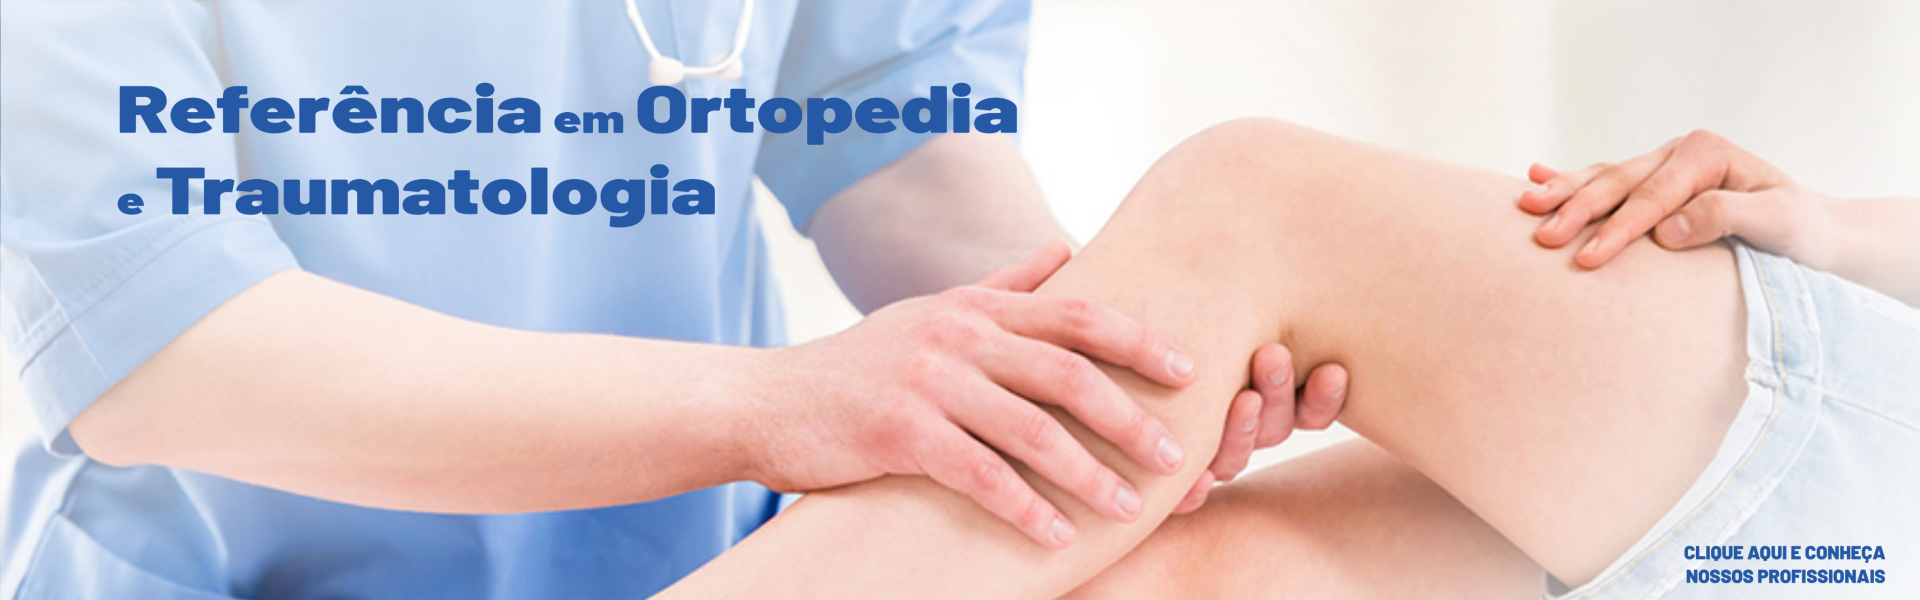 02 - Banner Ortopedia